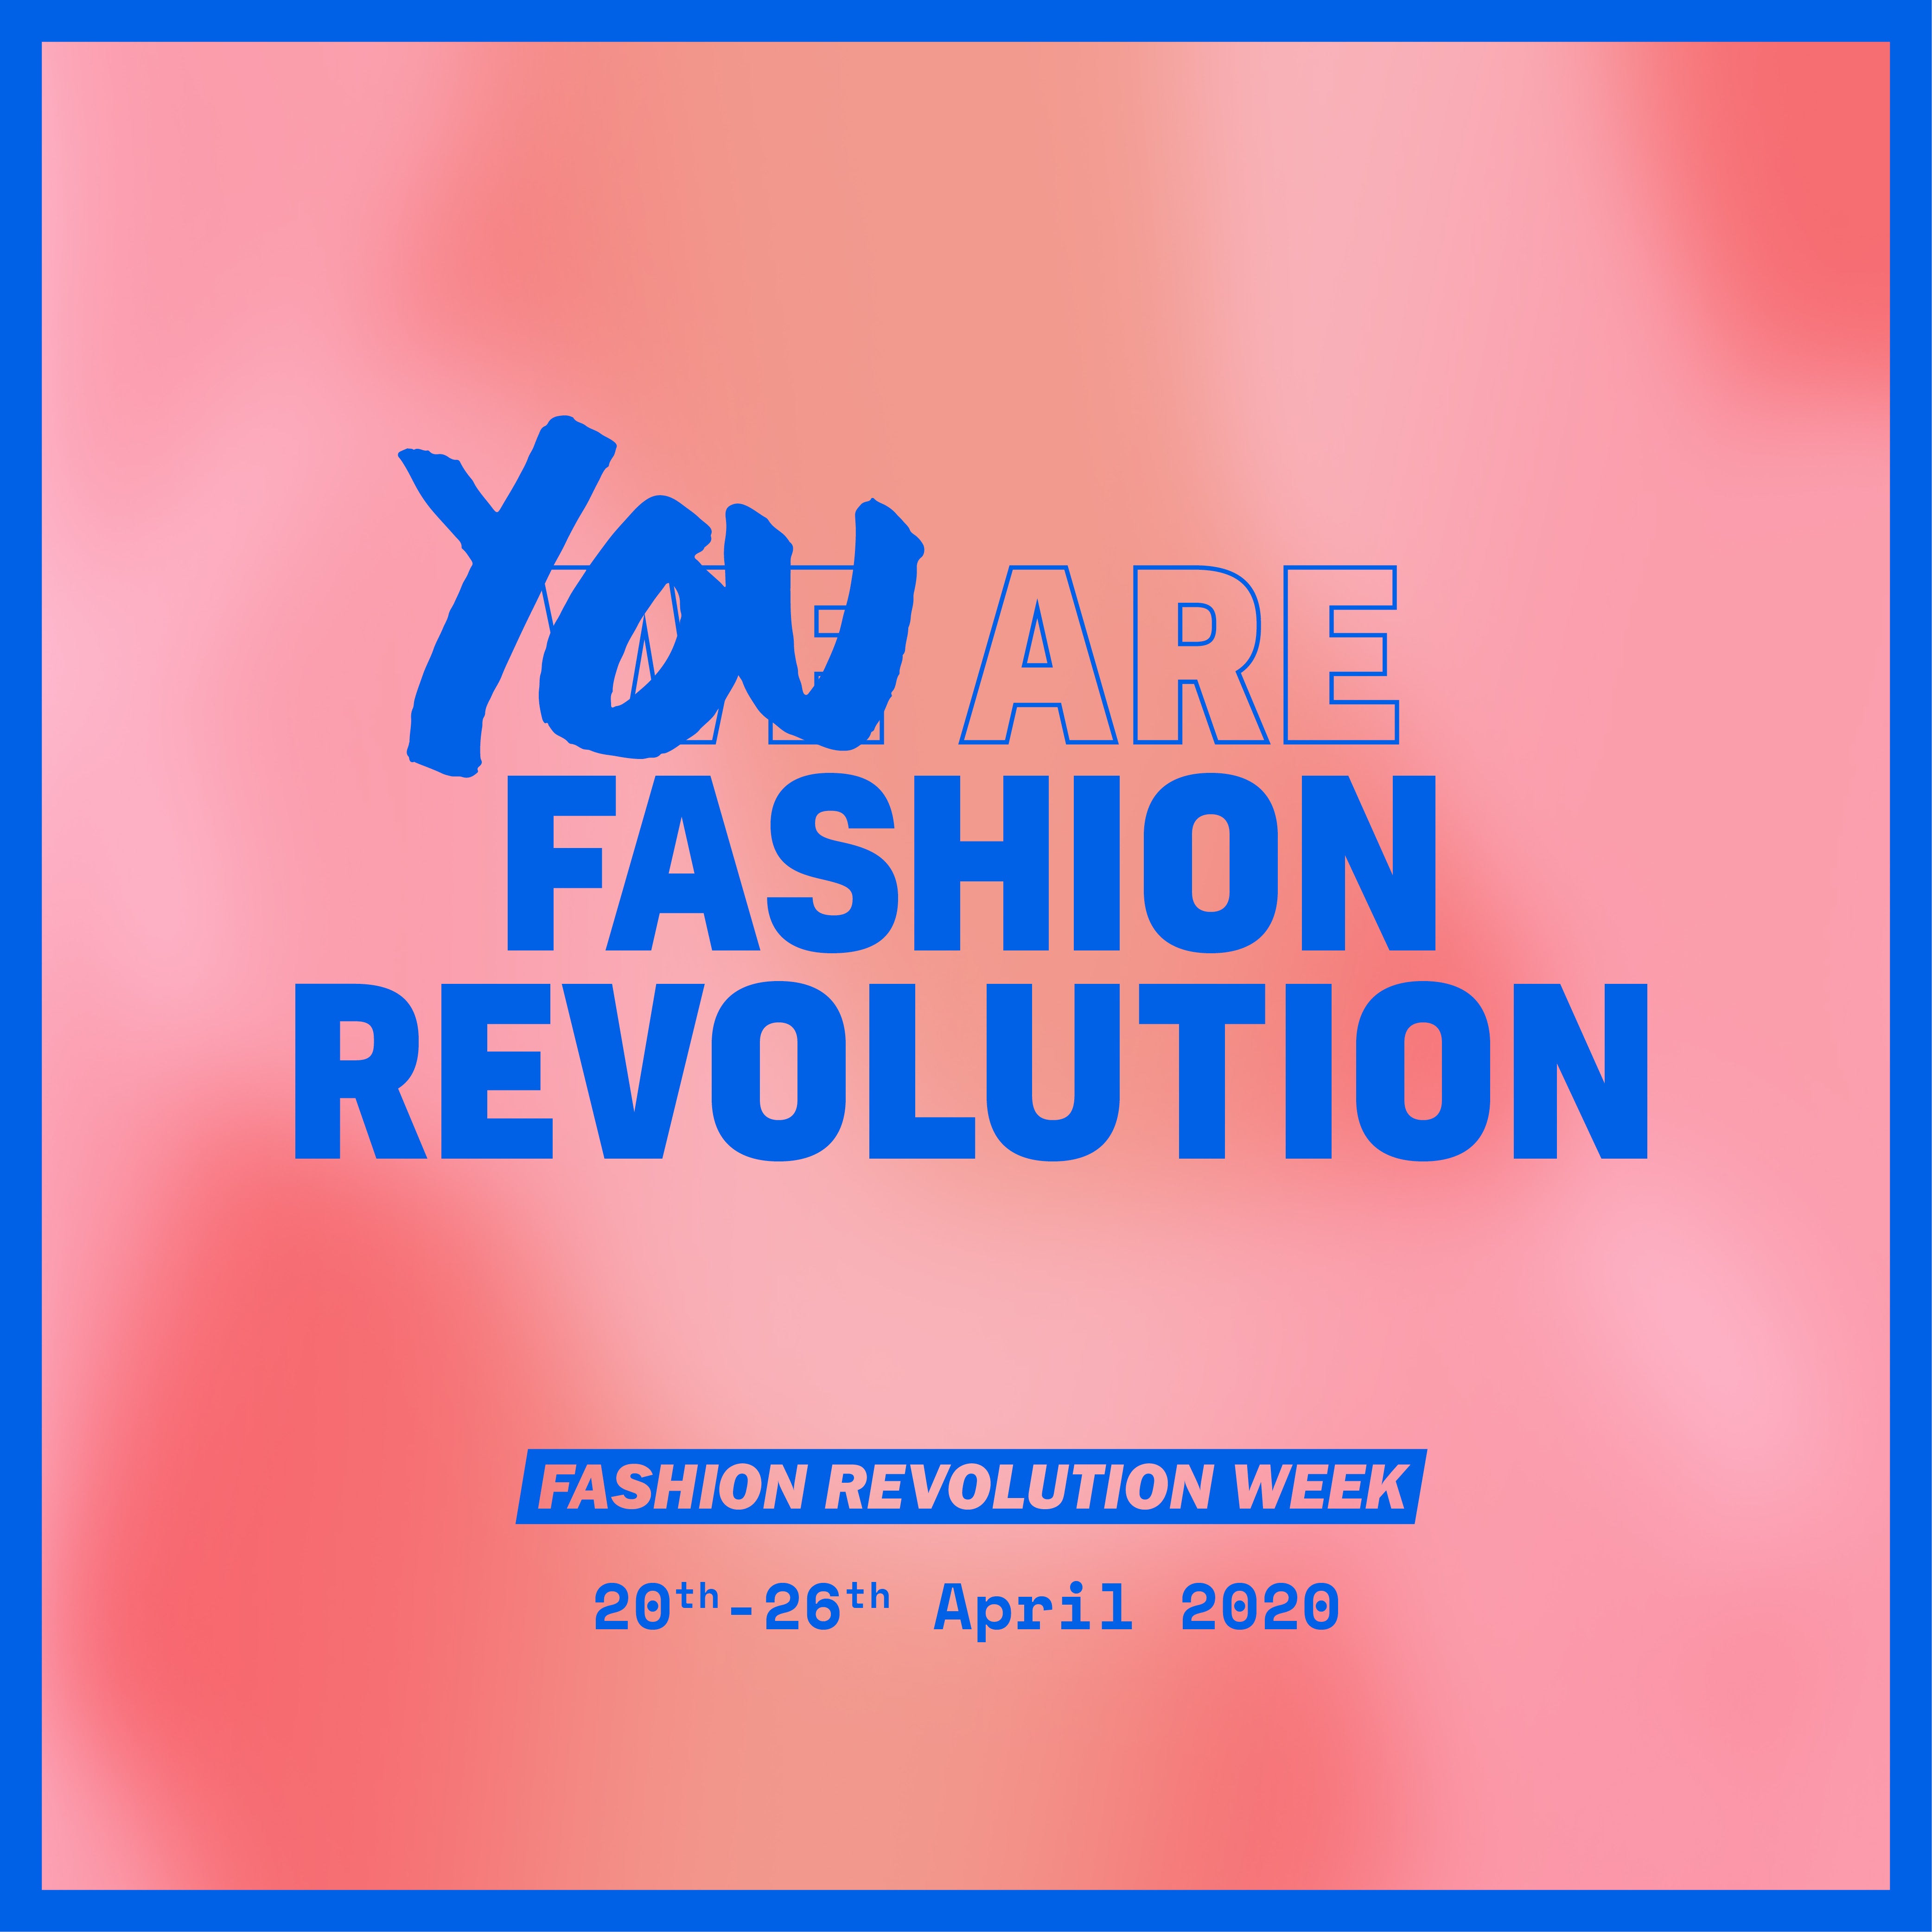 A Look at Fashion Revolution Week 2020